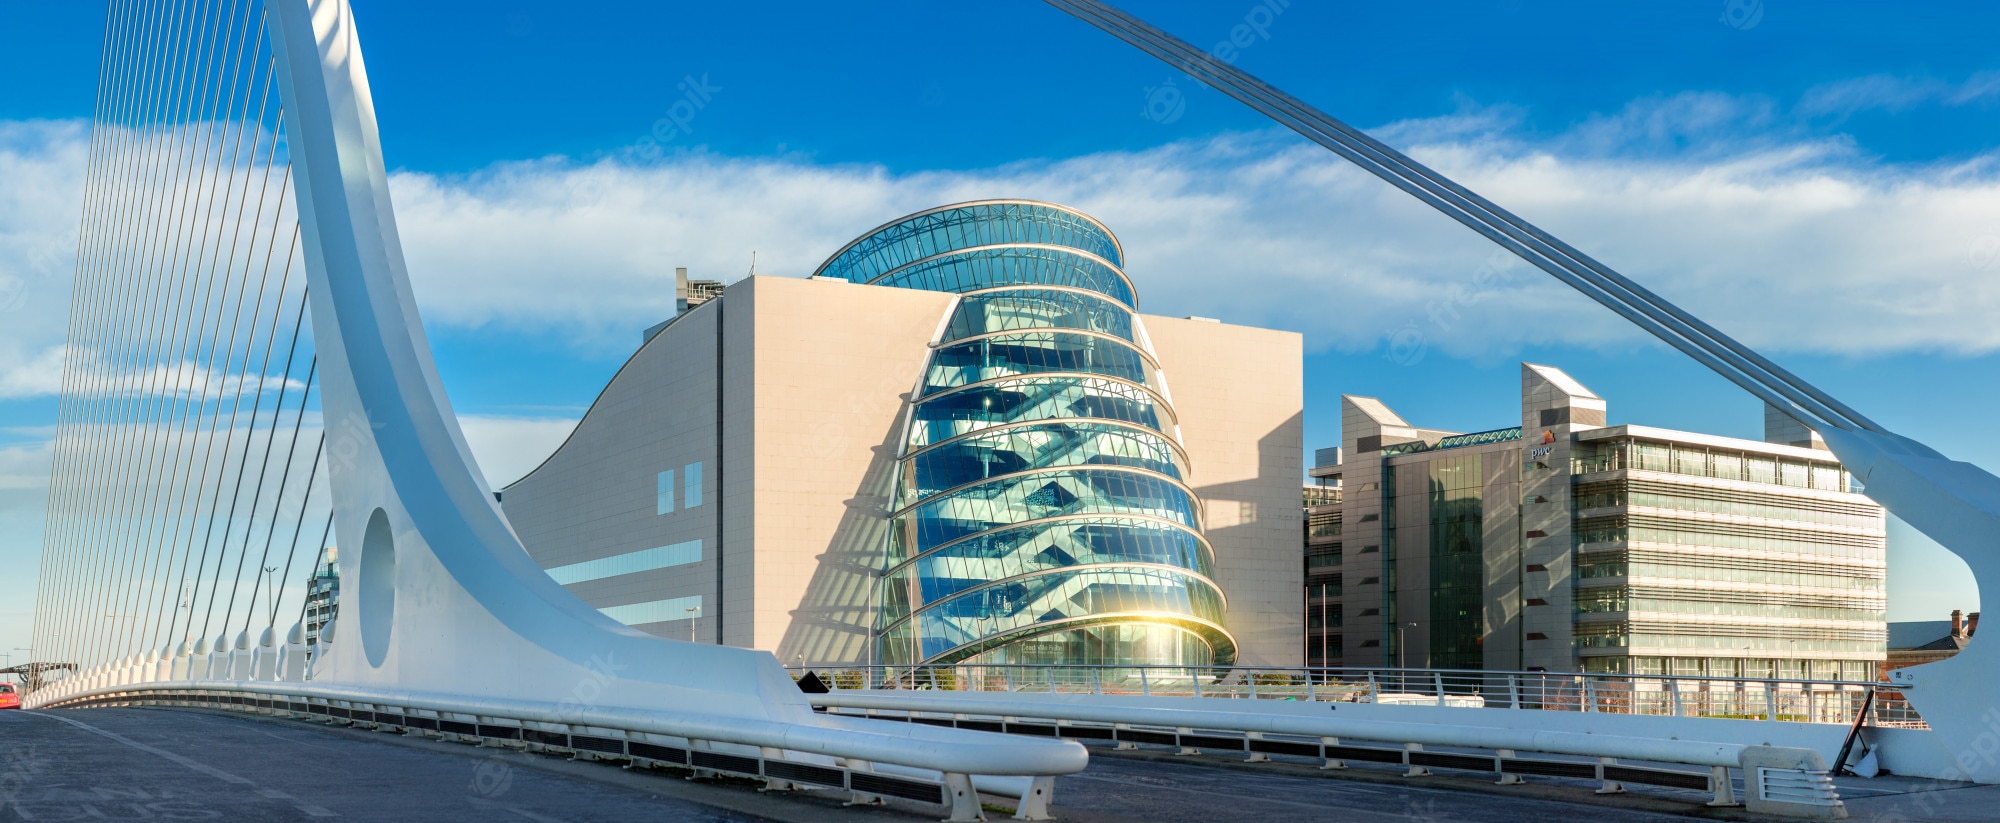 Dublin's convention center